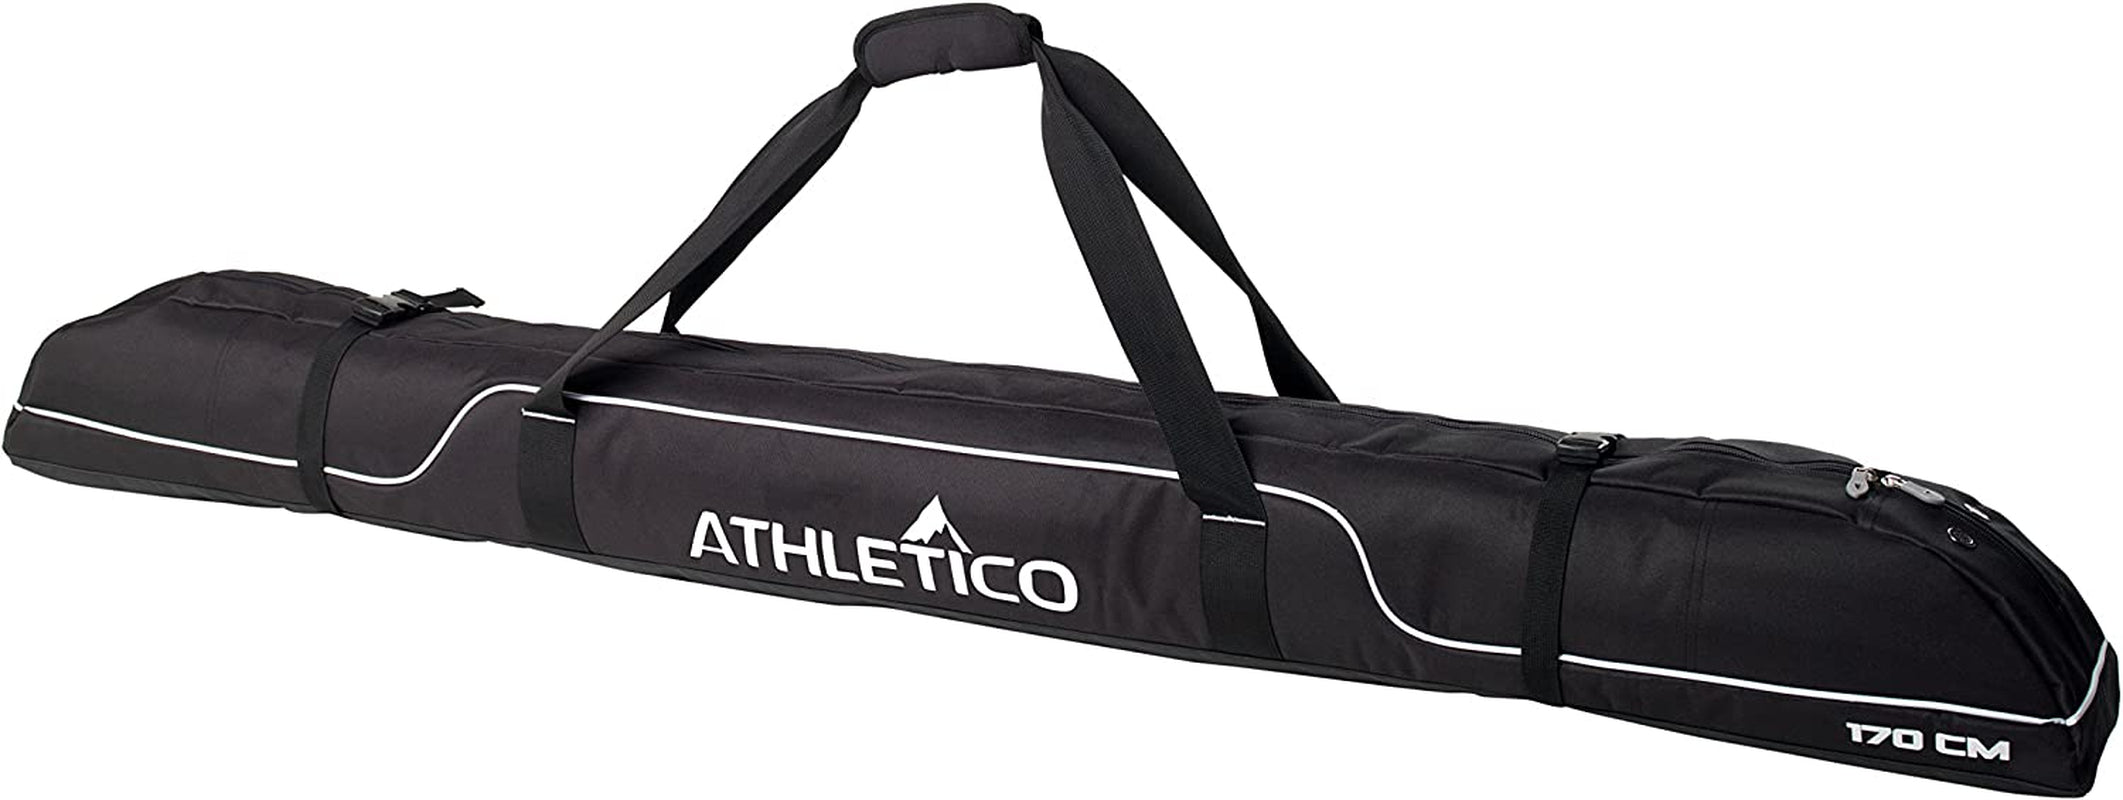 Athletico Diamond Trail Padded Ski Bag - Single Ski Travel Bag to Transport Skis